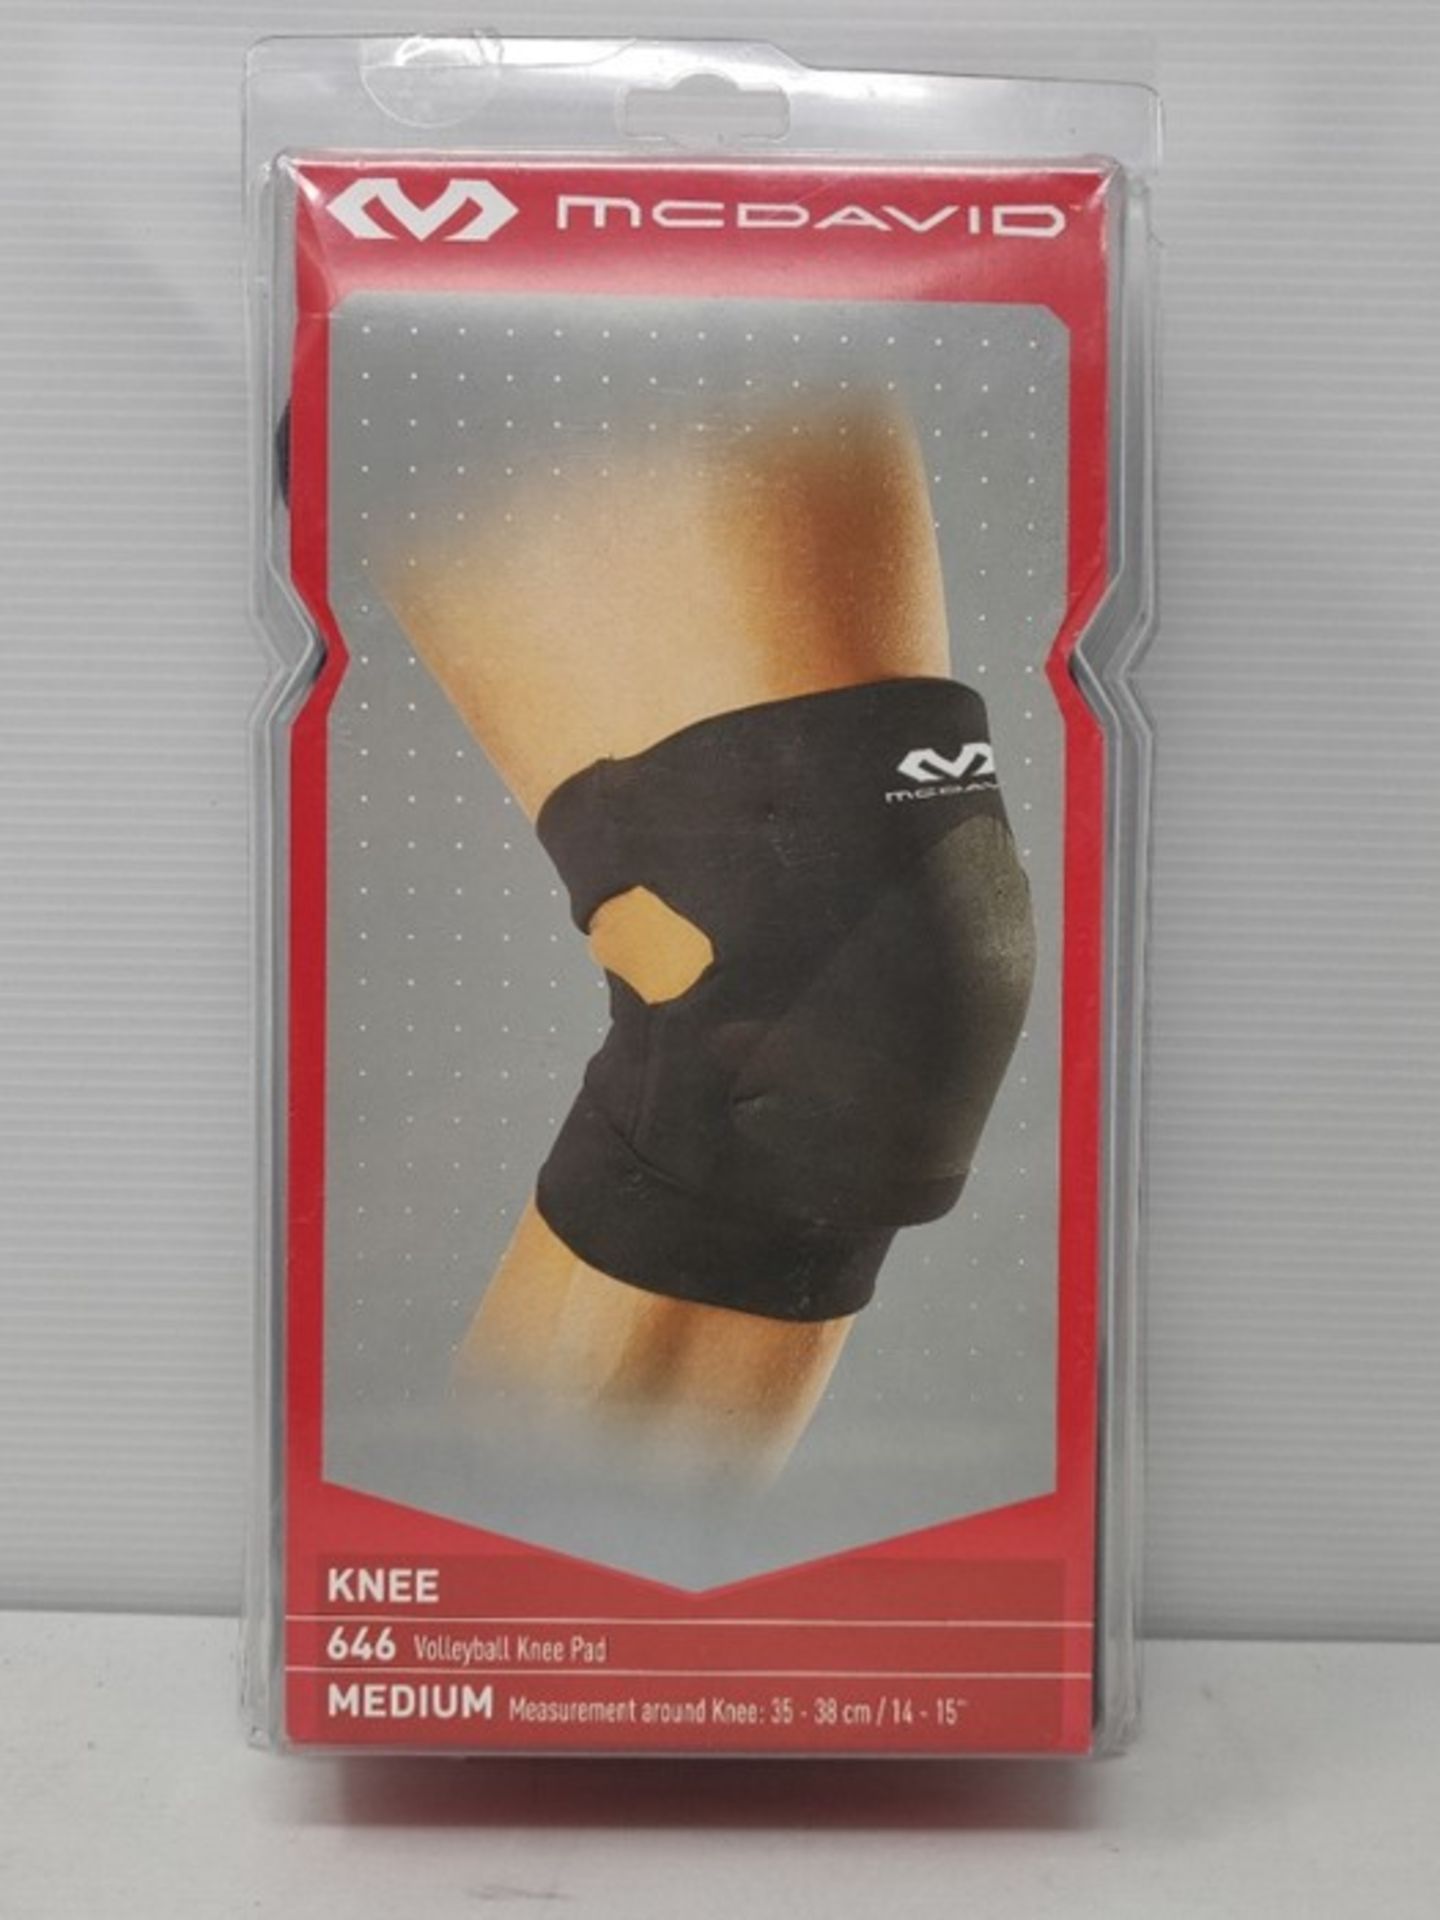 Mcdavid Volleyball Knee Pad - Image 2 of 3